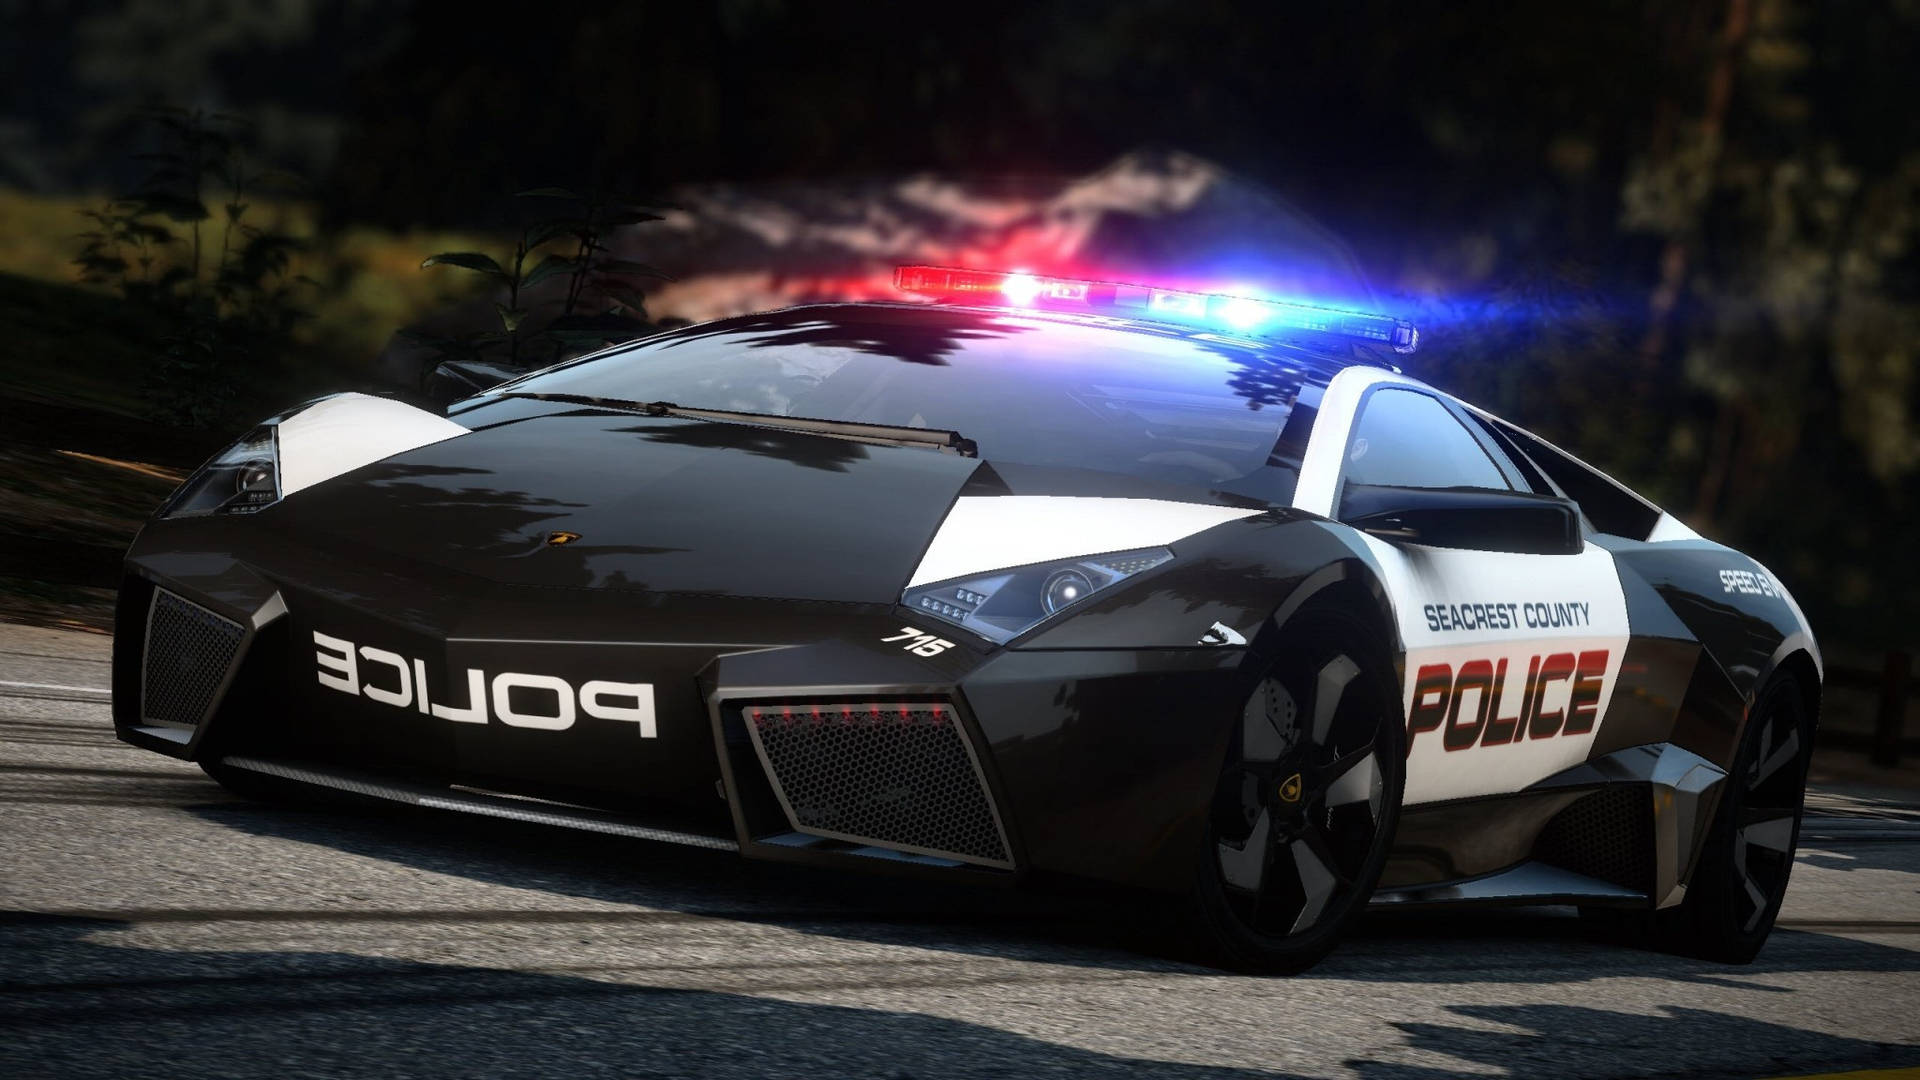 Need For Speed Police Lamborghini Background